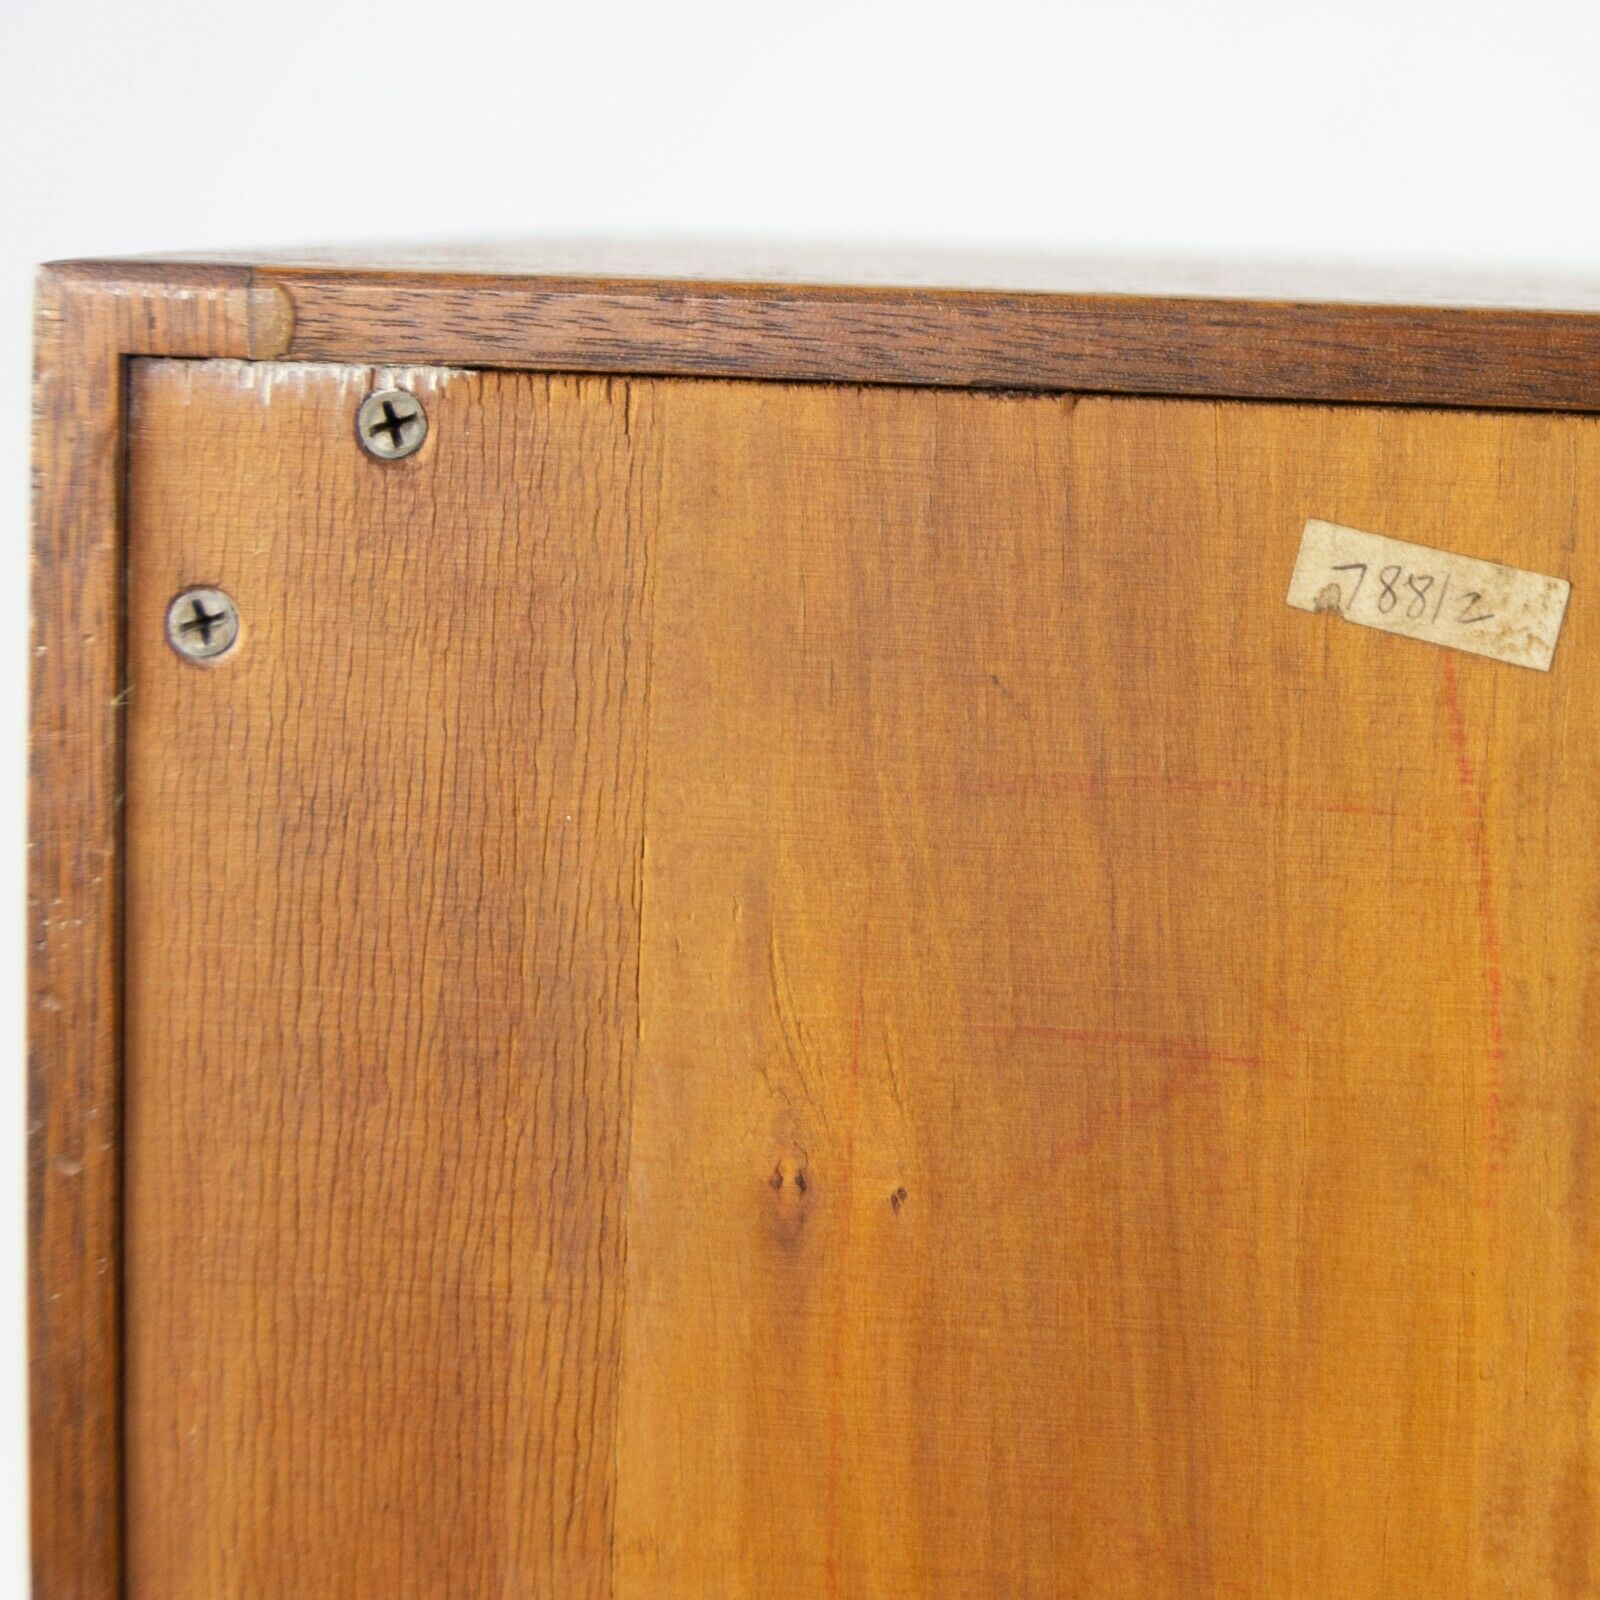 1950s George Nakashima Studio Full Size Dovetailed Walnut Headboard Bed Cabinet